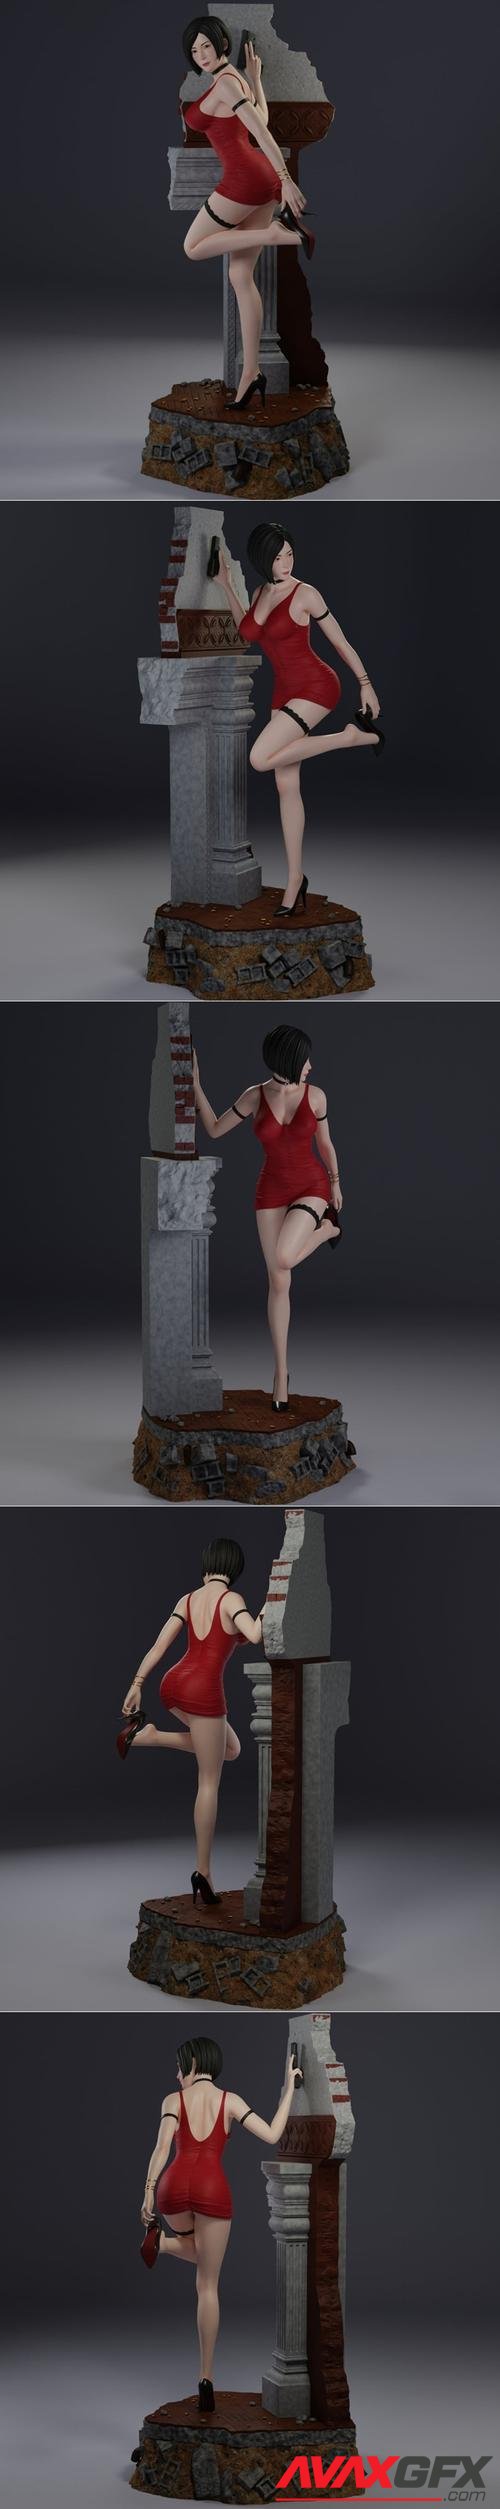 Ada Wong Figurine by Uroboros 3D Print